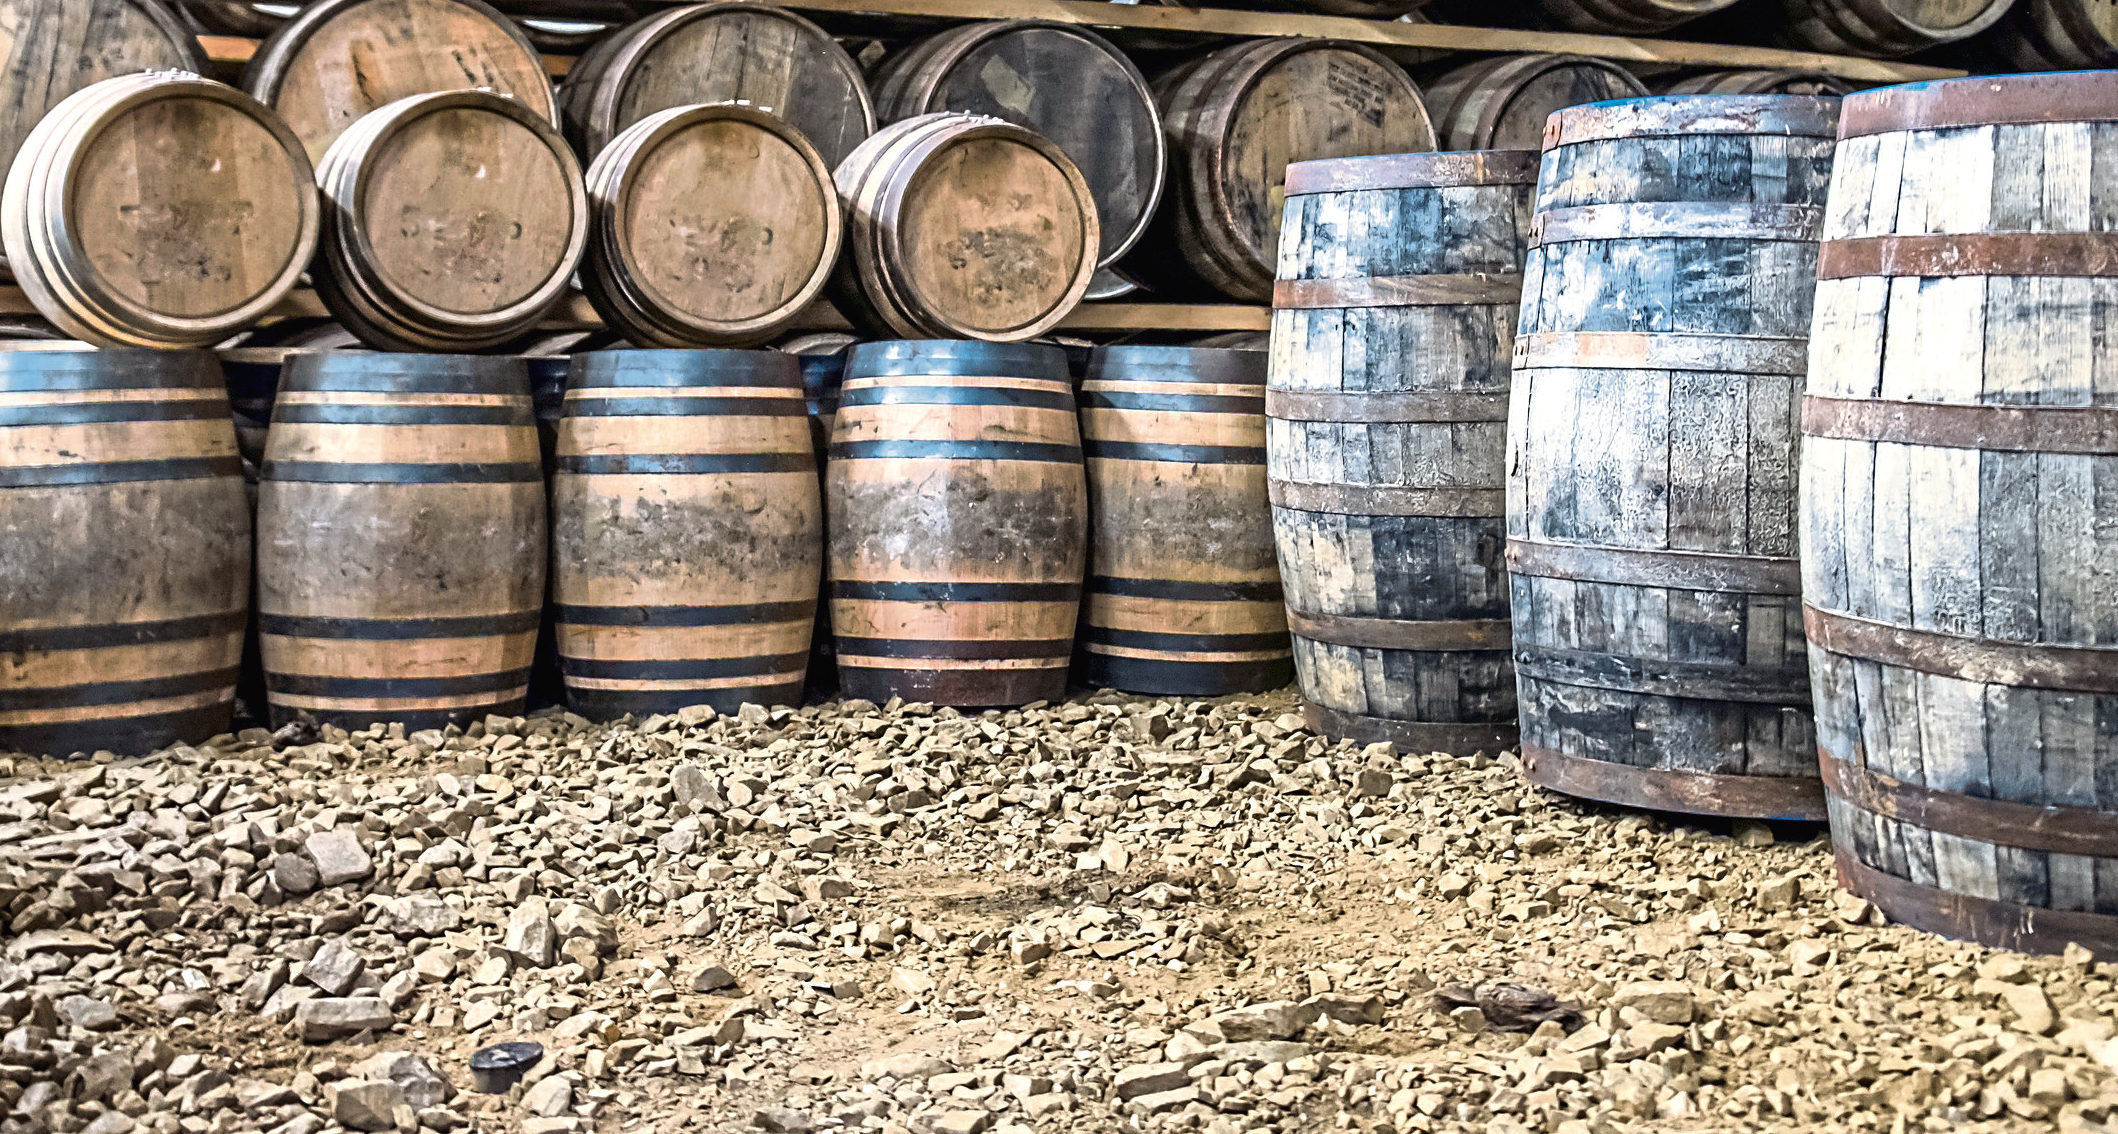 Whisky barrels in warehouse storage.